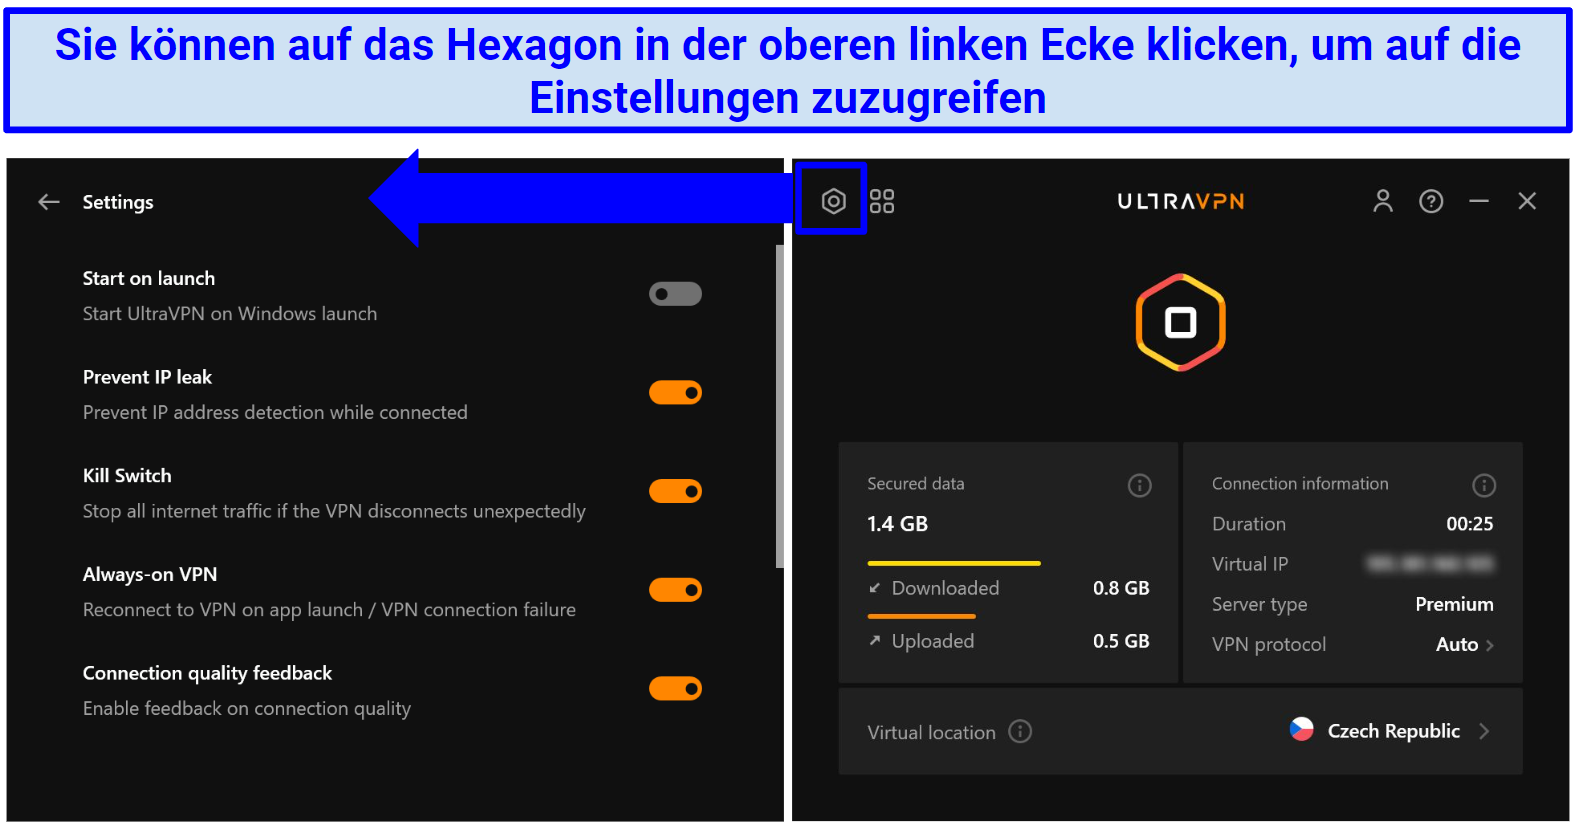 Screenshot of UltraVPN's Windows UI highlighting how to access the settings menu